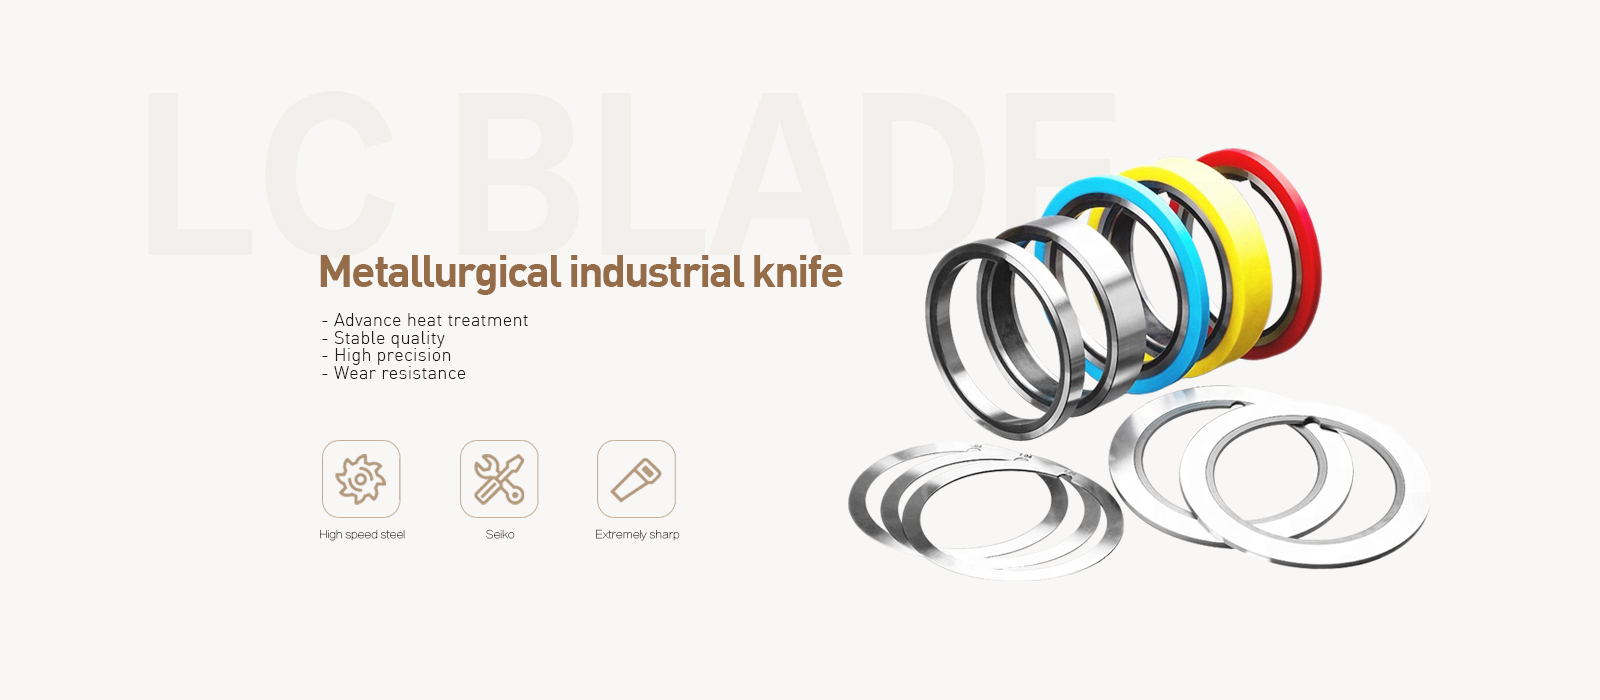 Metallurgical industrial knife